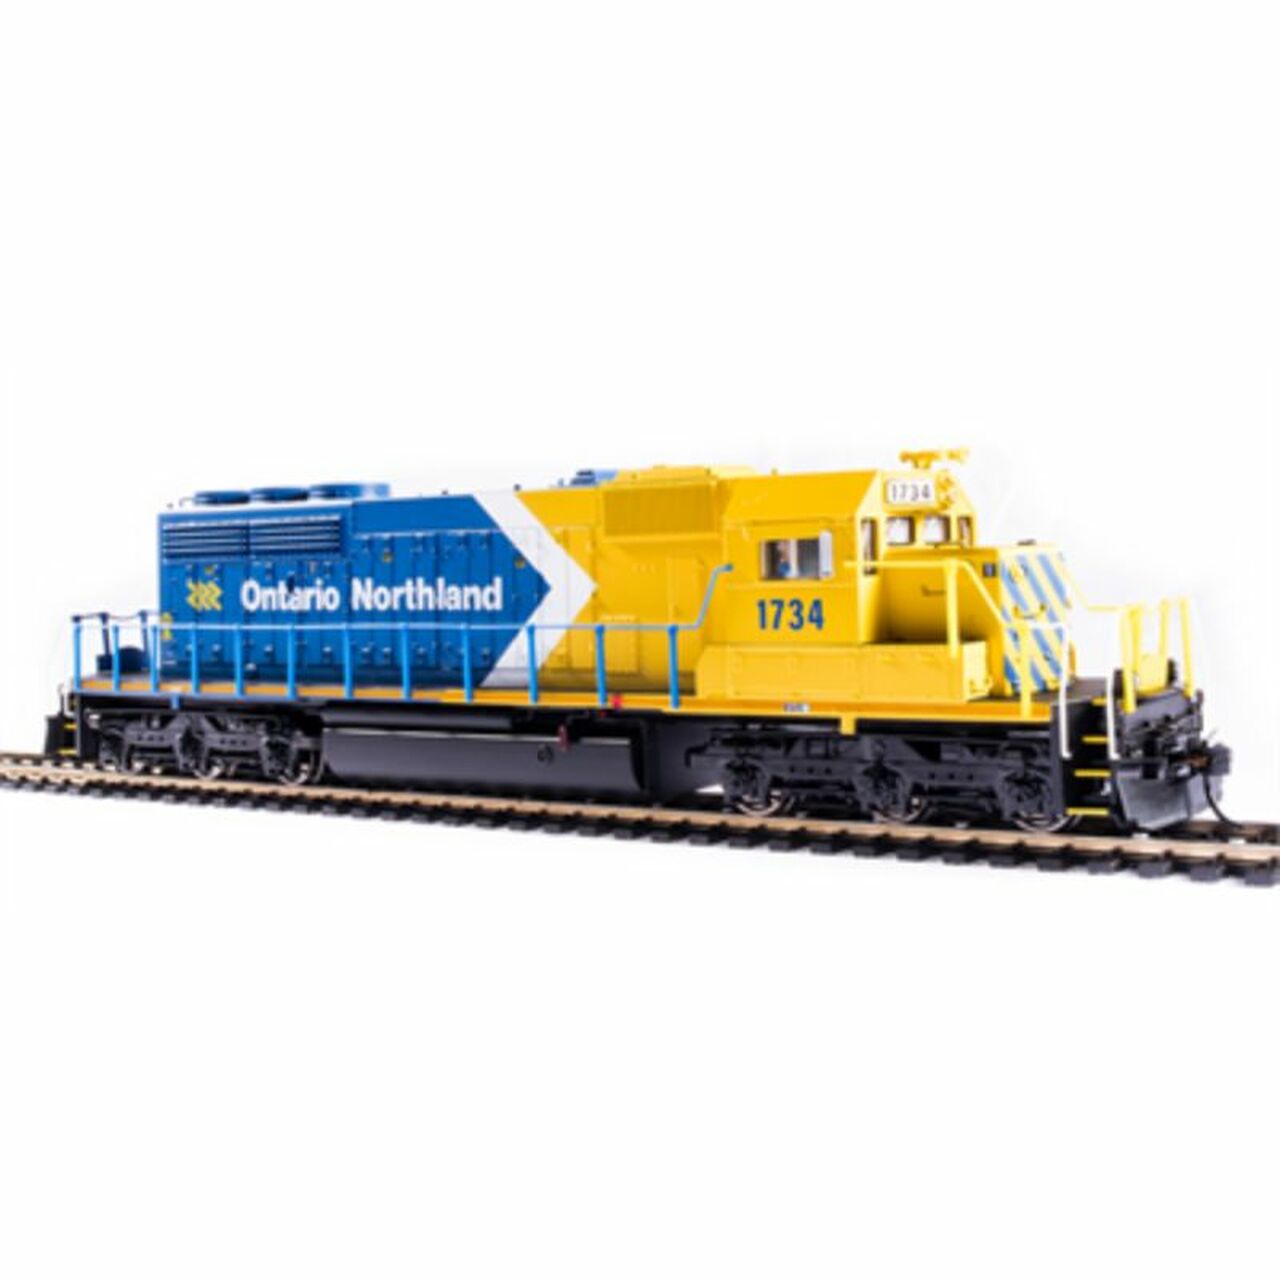 Broadway Limited 6789 HO Ontario Northland EMD SD40-2 Diesel Locomotive #1734